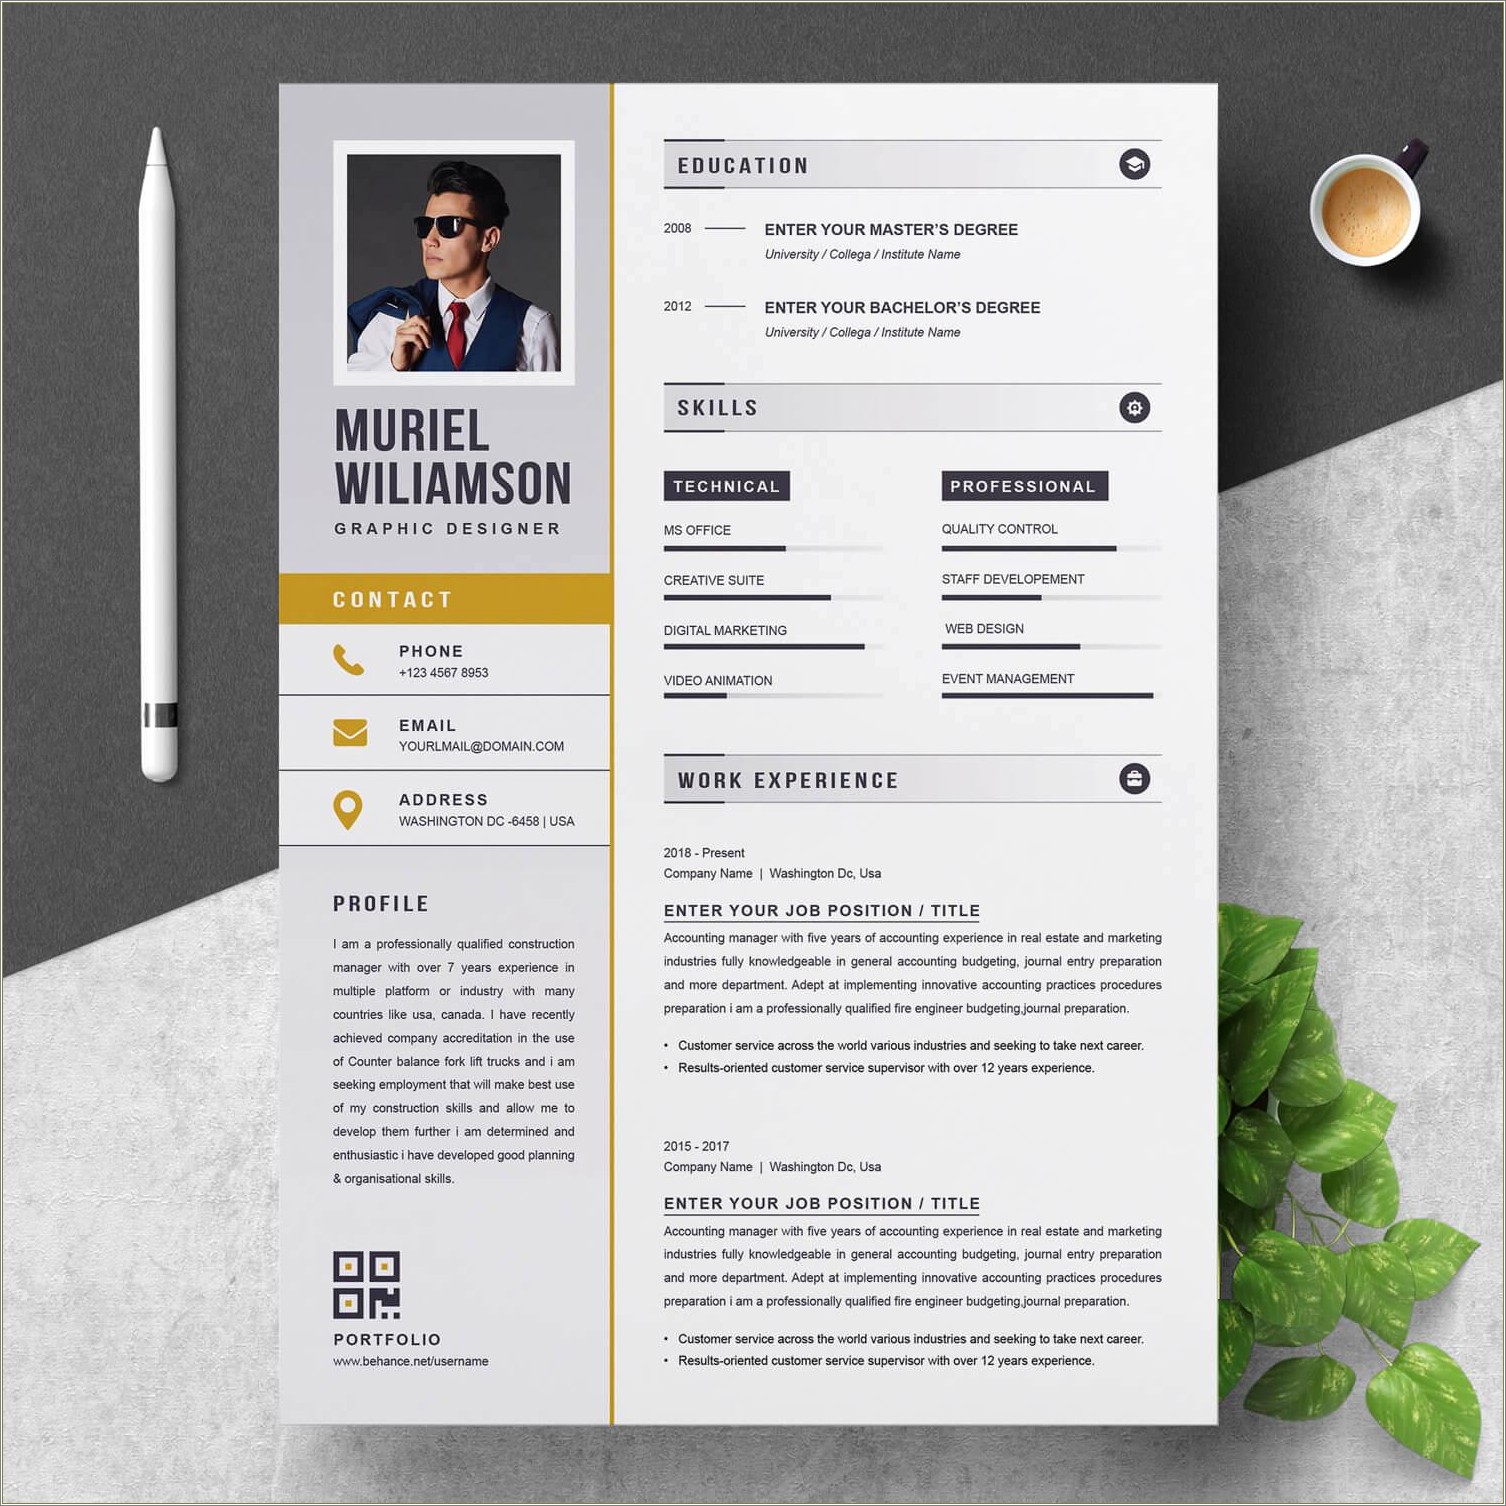 Graphic Design And Marketing Job Resume